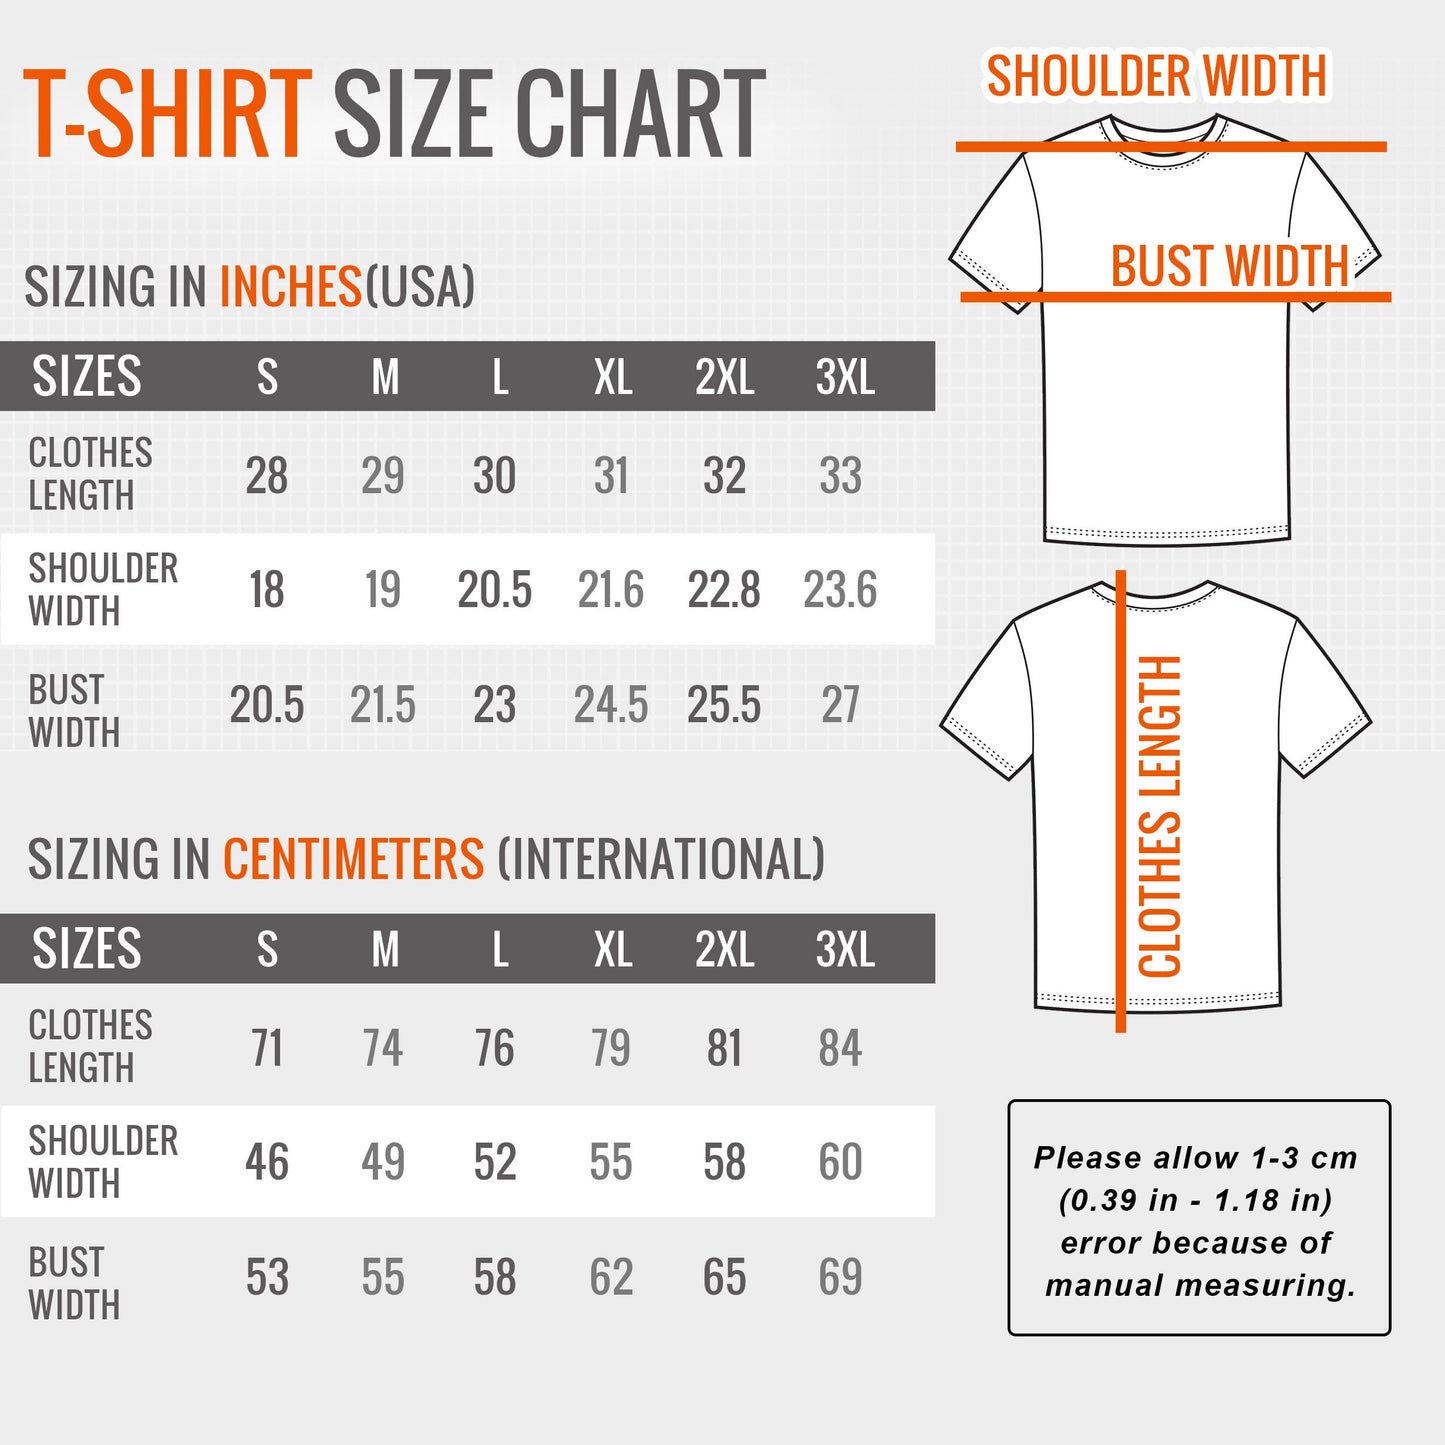 Size Matters Not Unisex T-Shirt